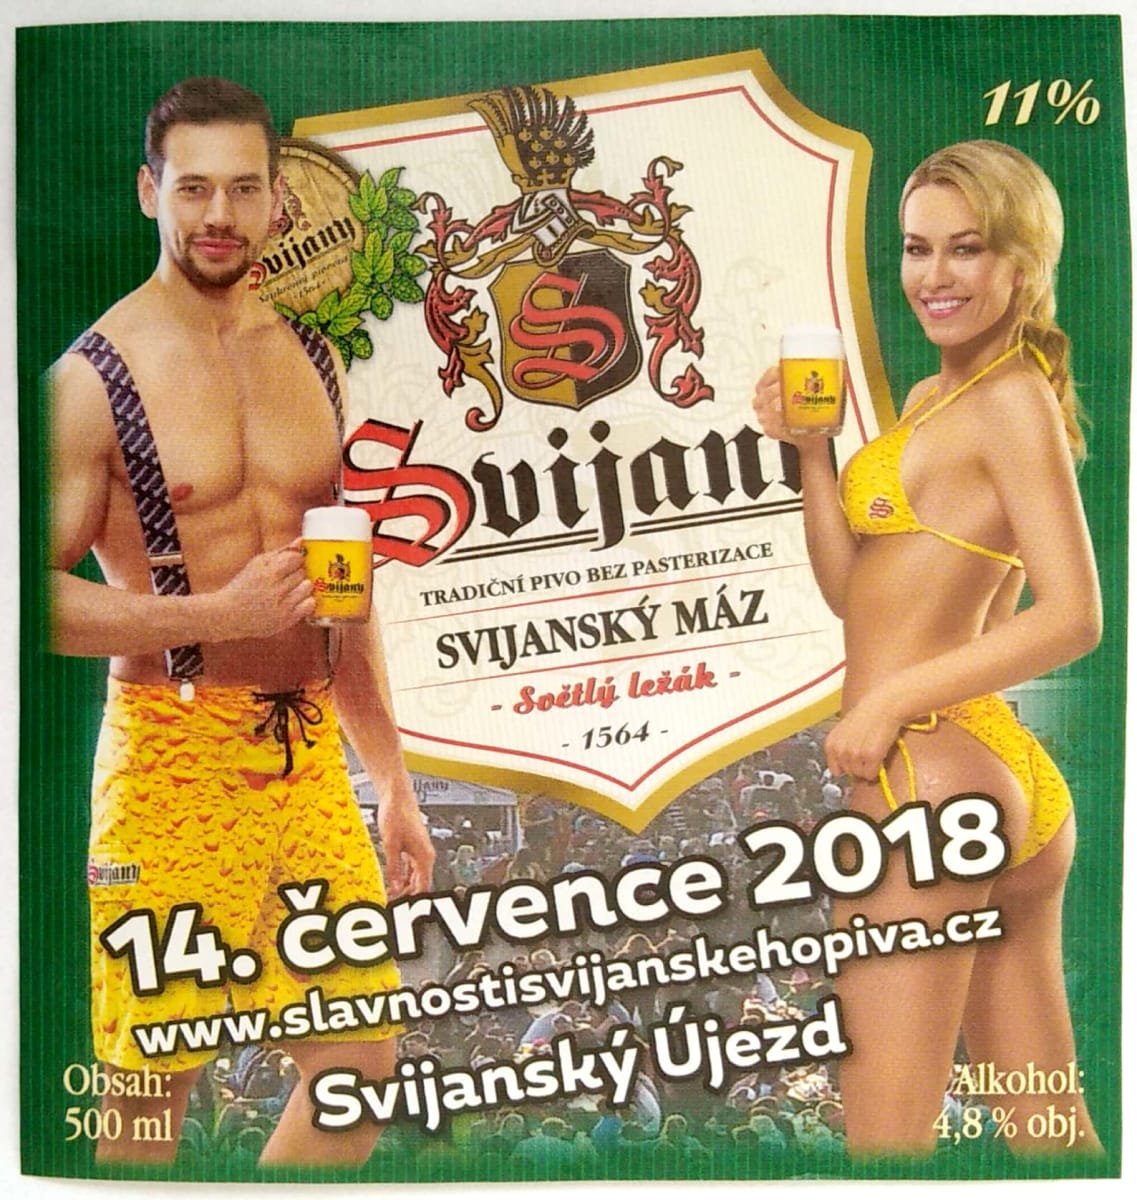 Svijanský máz slavnosti piva 2018